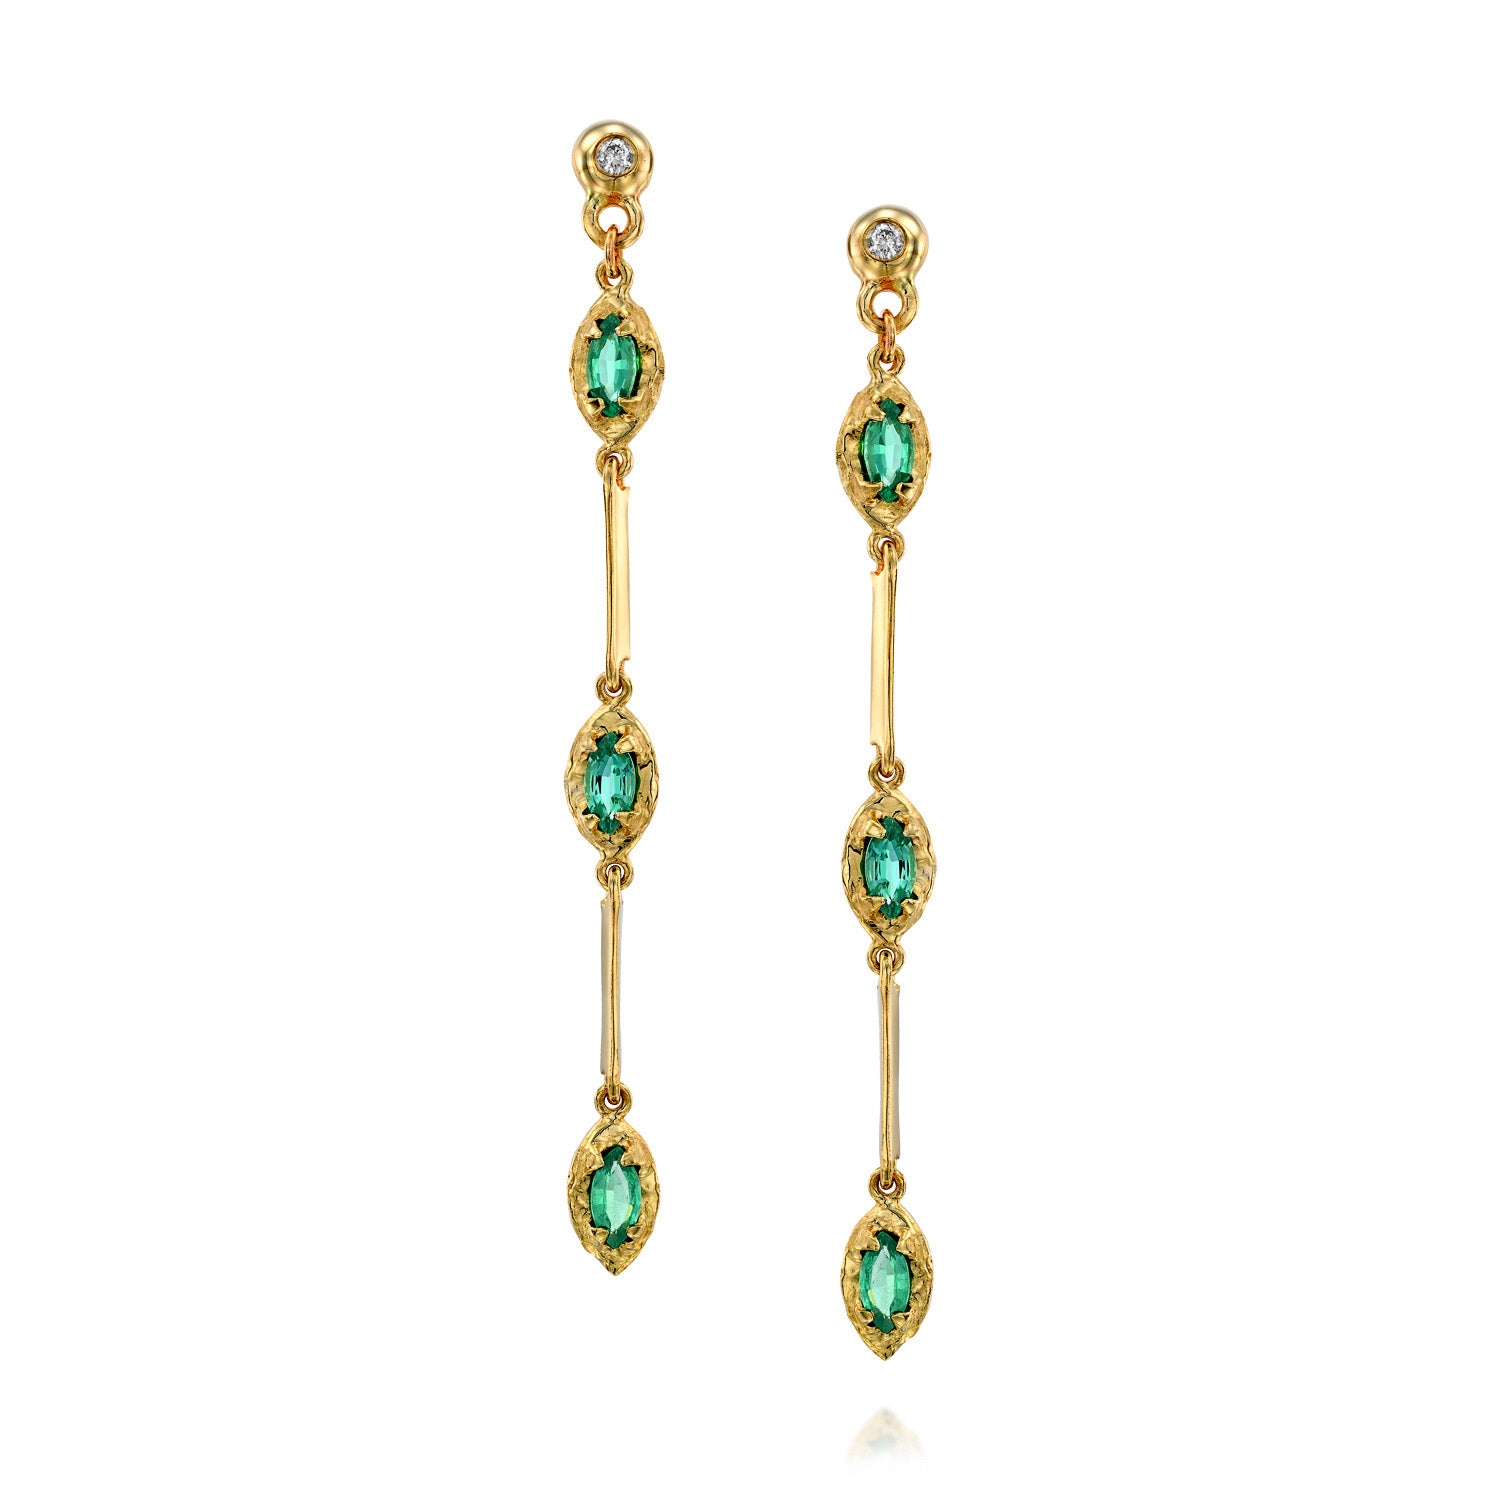 Hera earrings - emerald